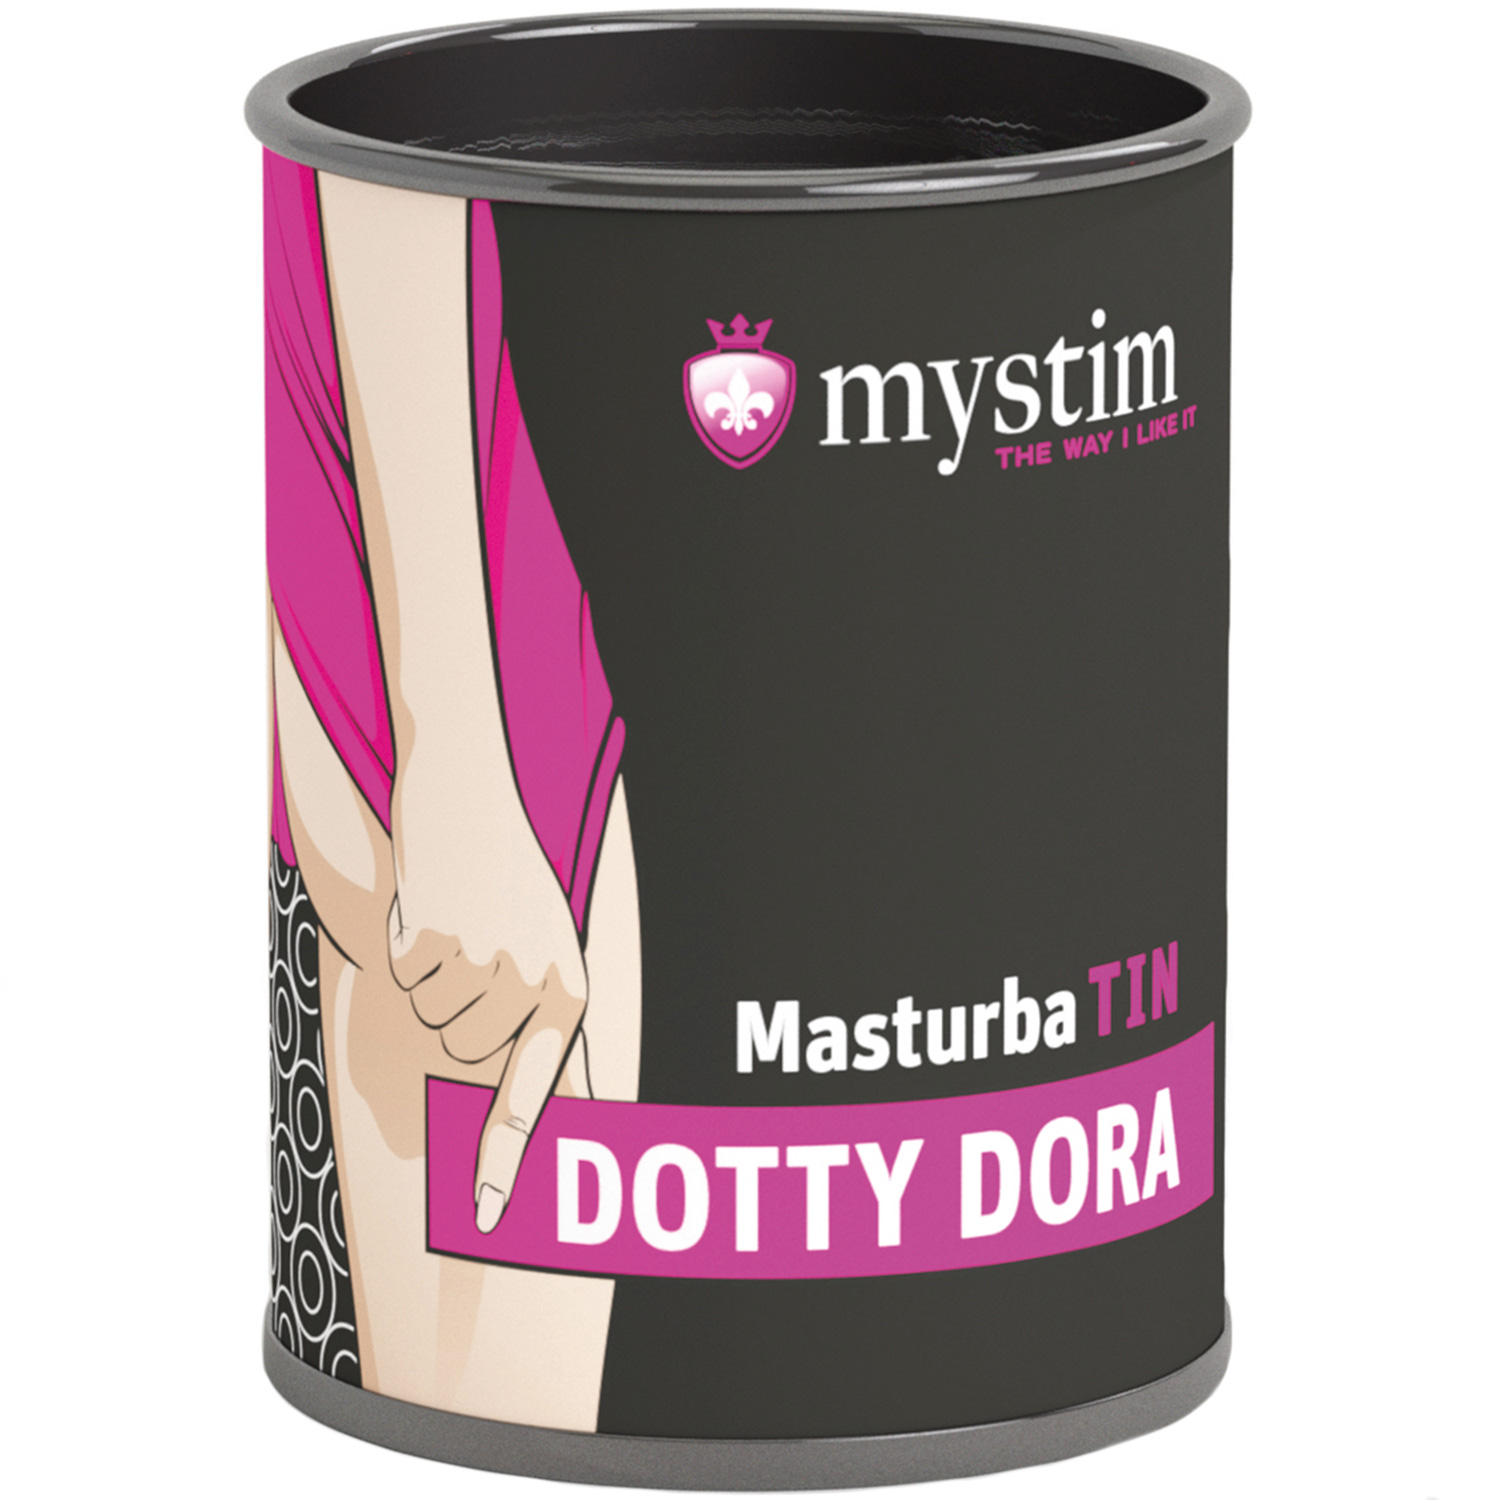 Mystim Dotty Dora MasturbaTIN - Hvid